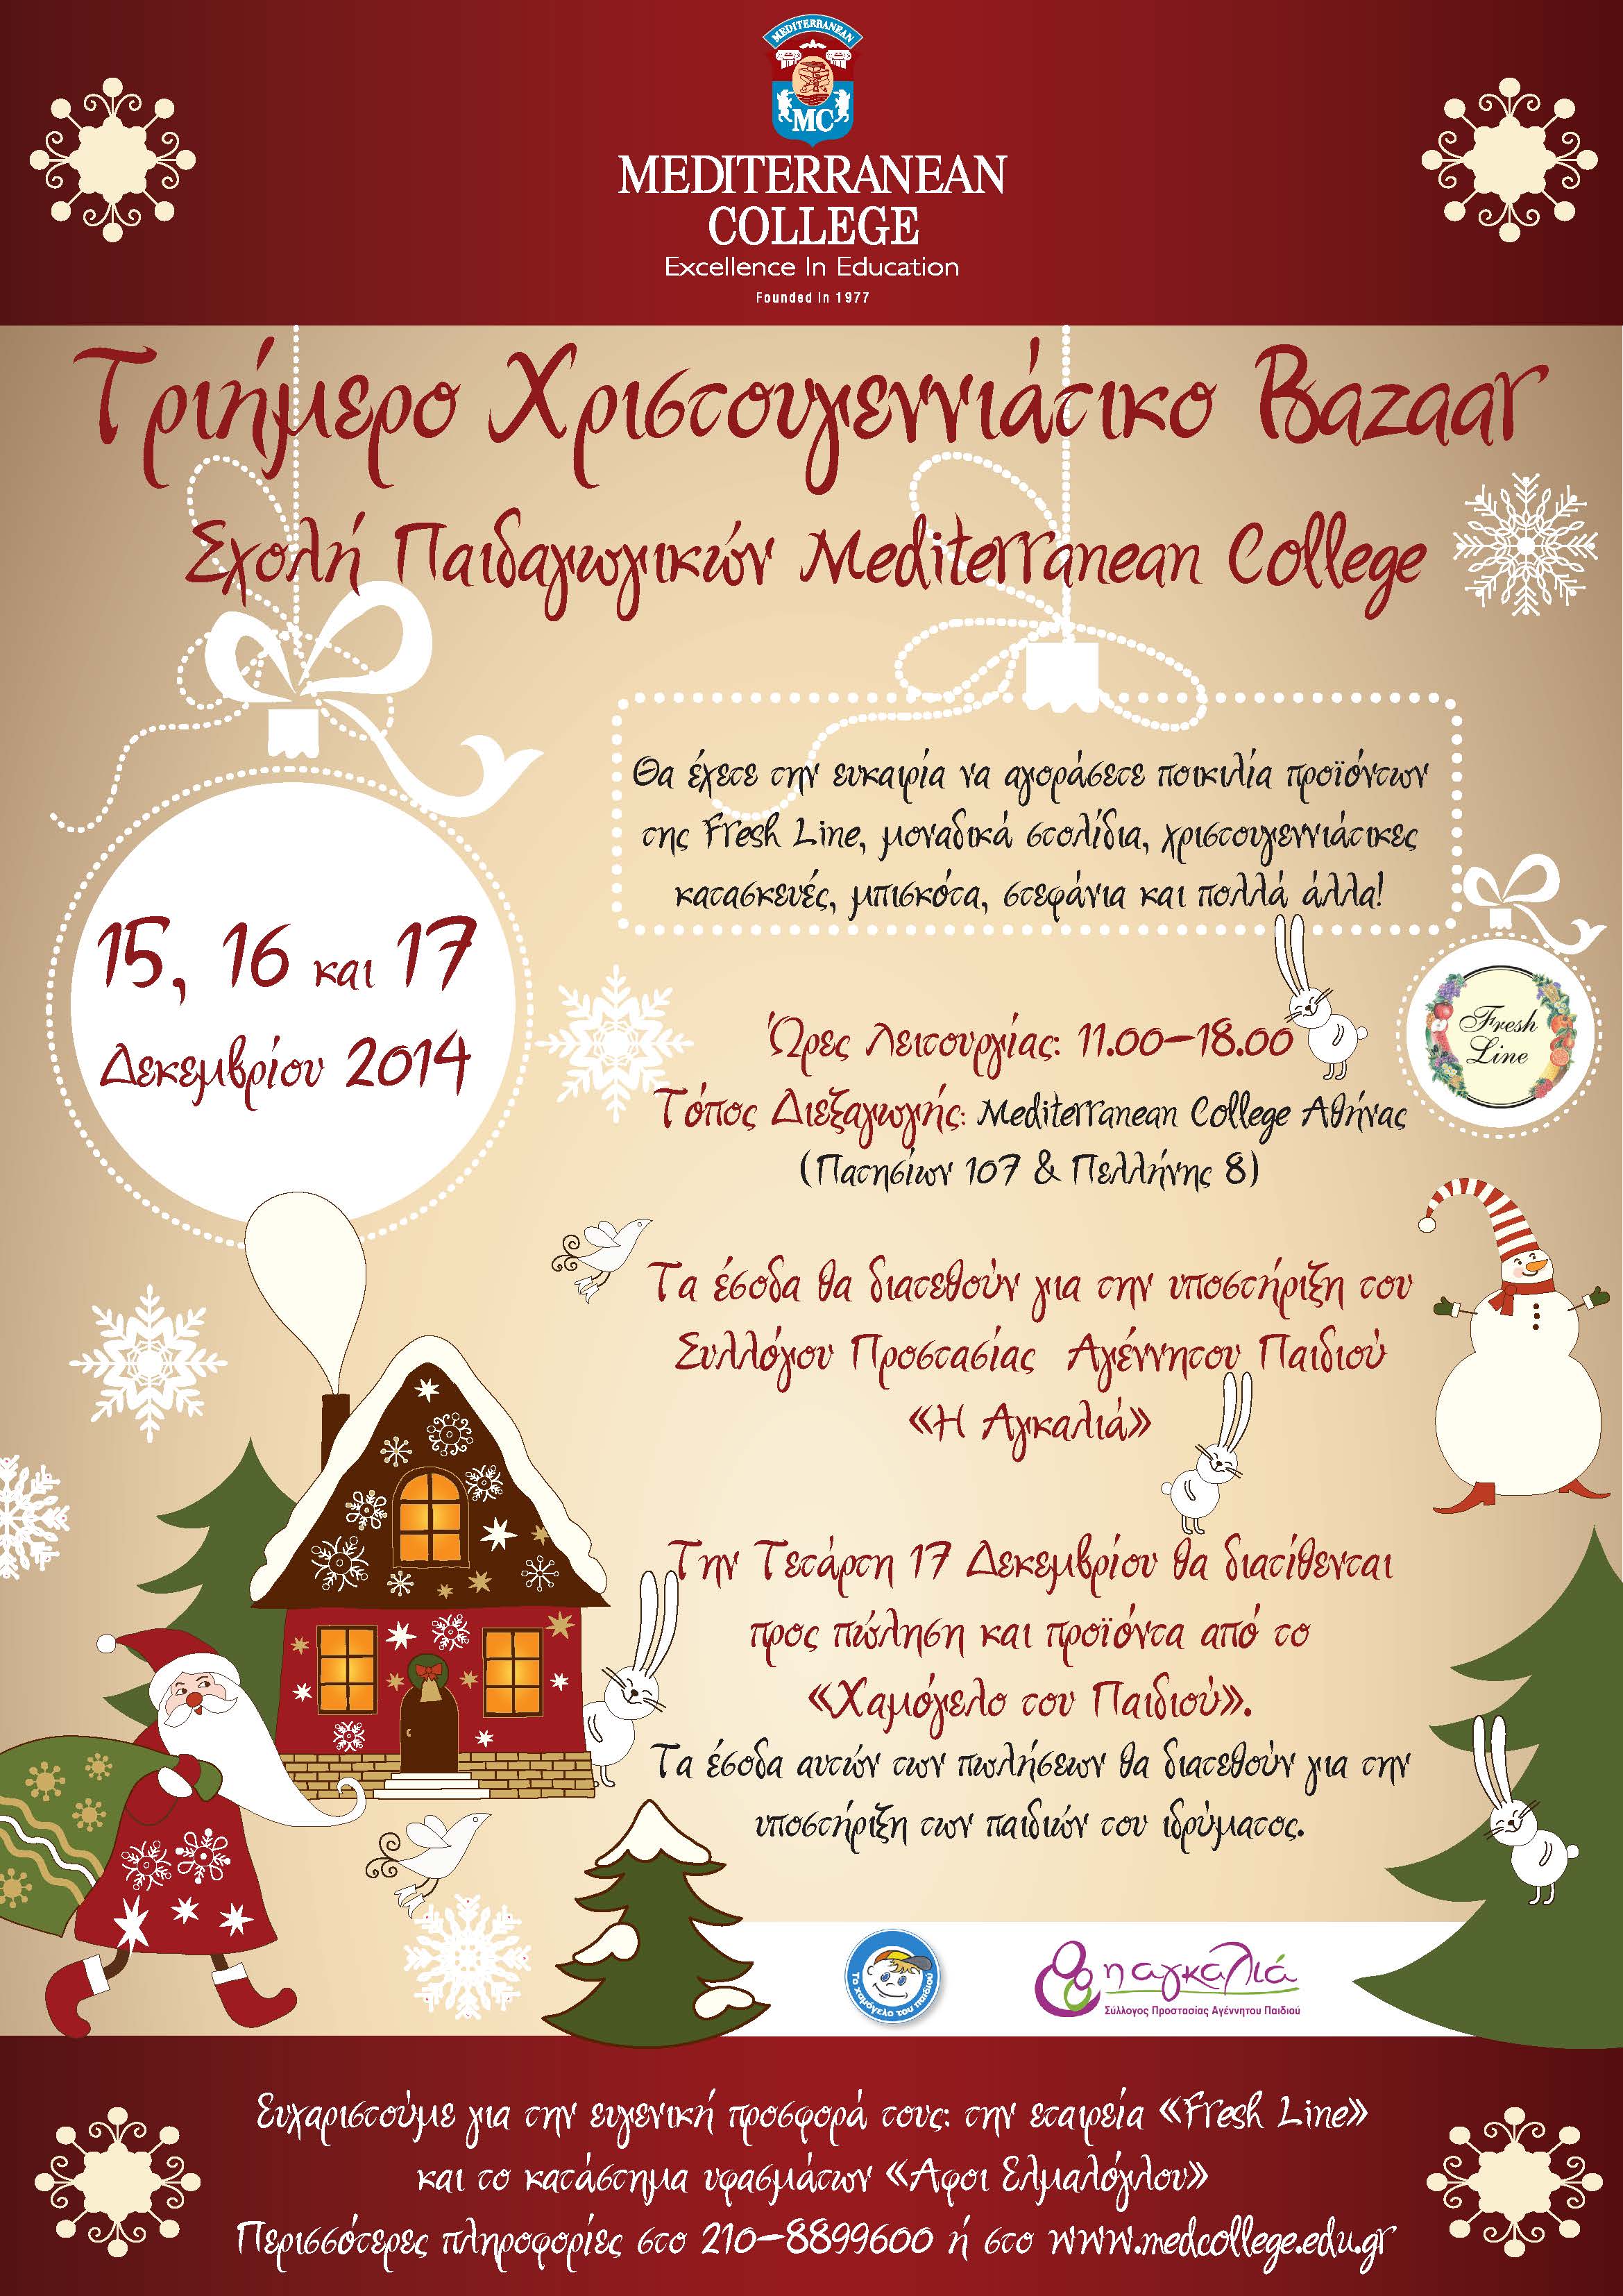 Mediterranean College – Σχολή Παιδαγωγικών Τριήμερο Χριστουγεννιάτικο Bazaar